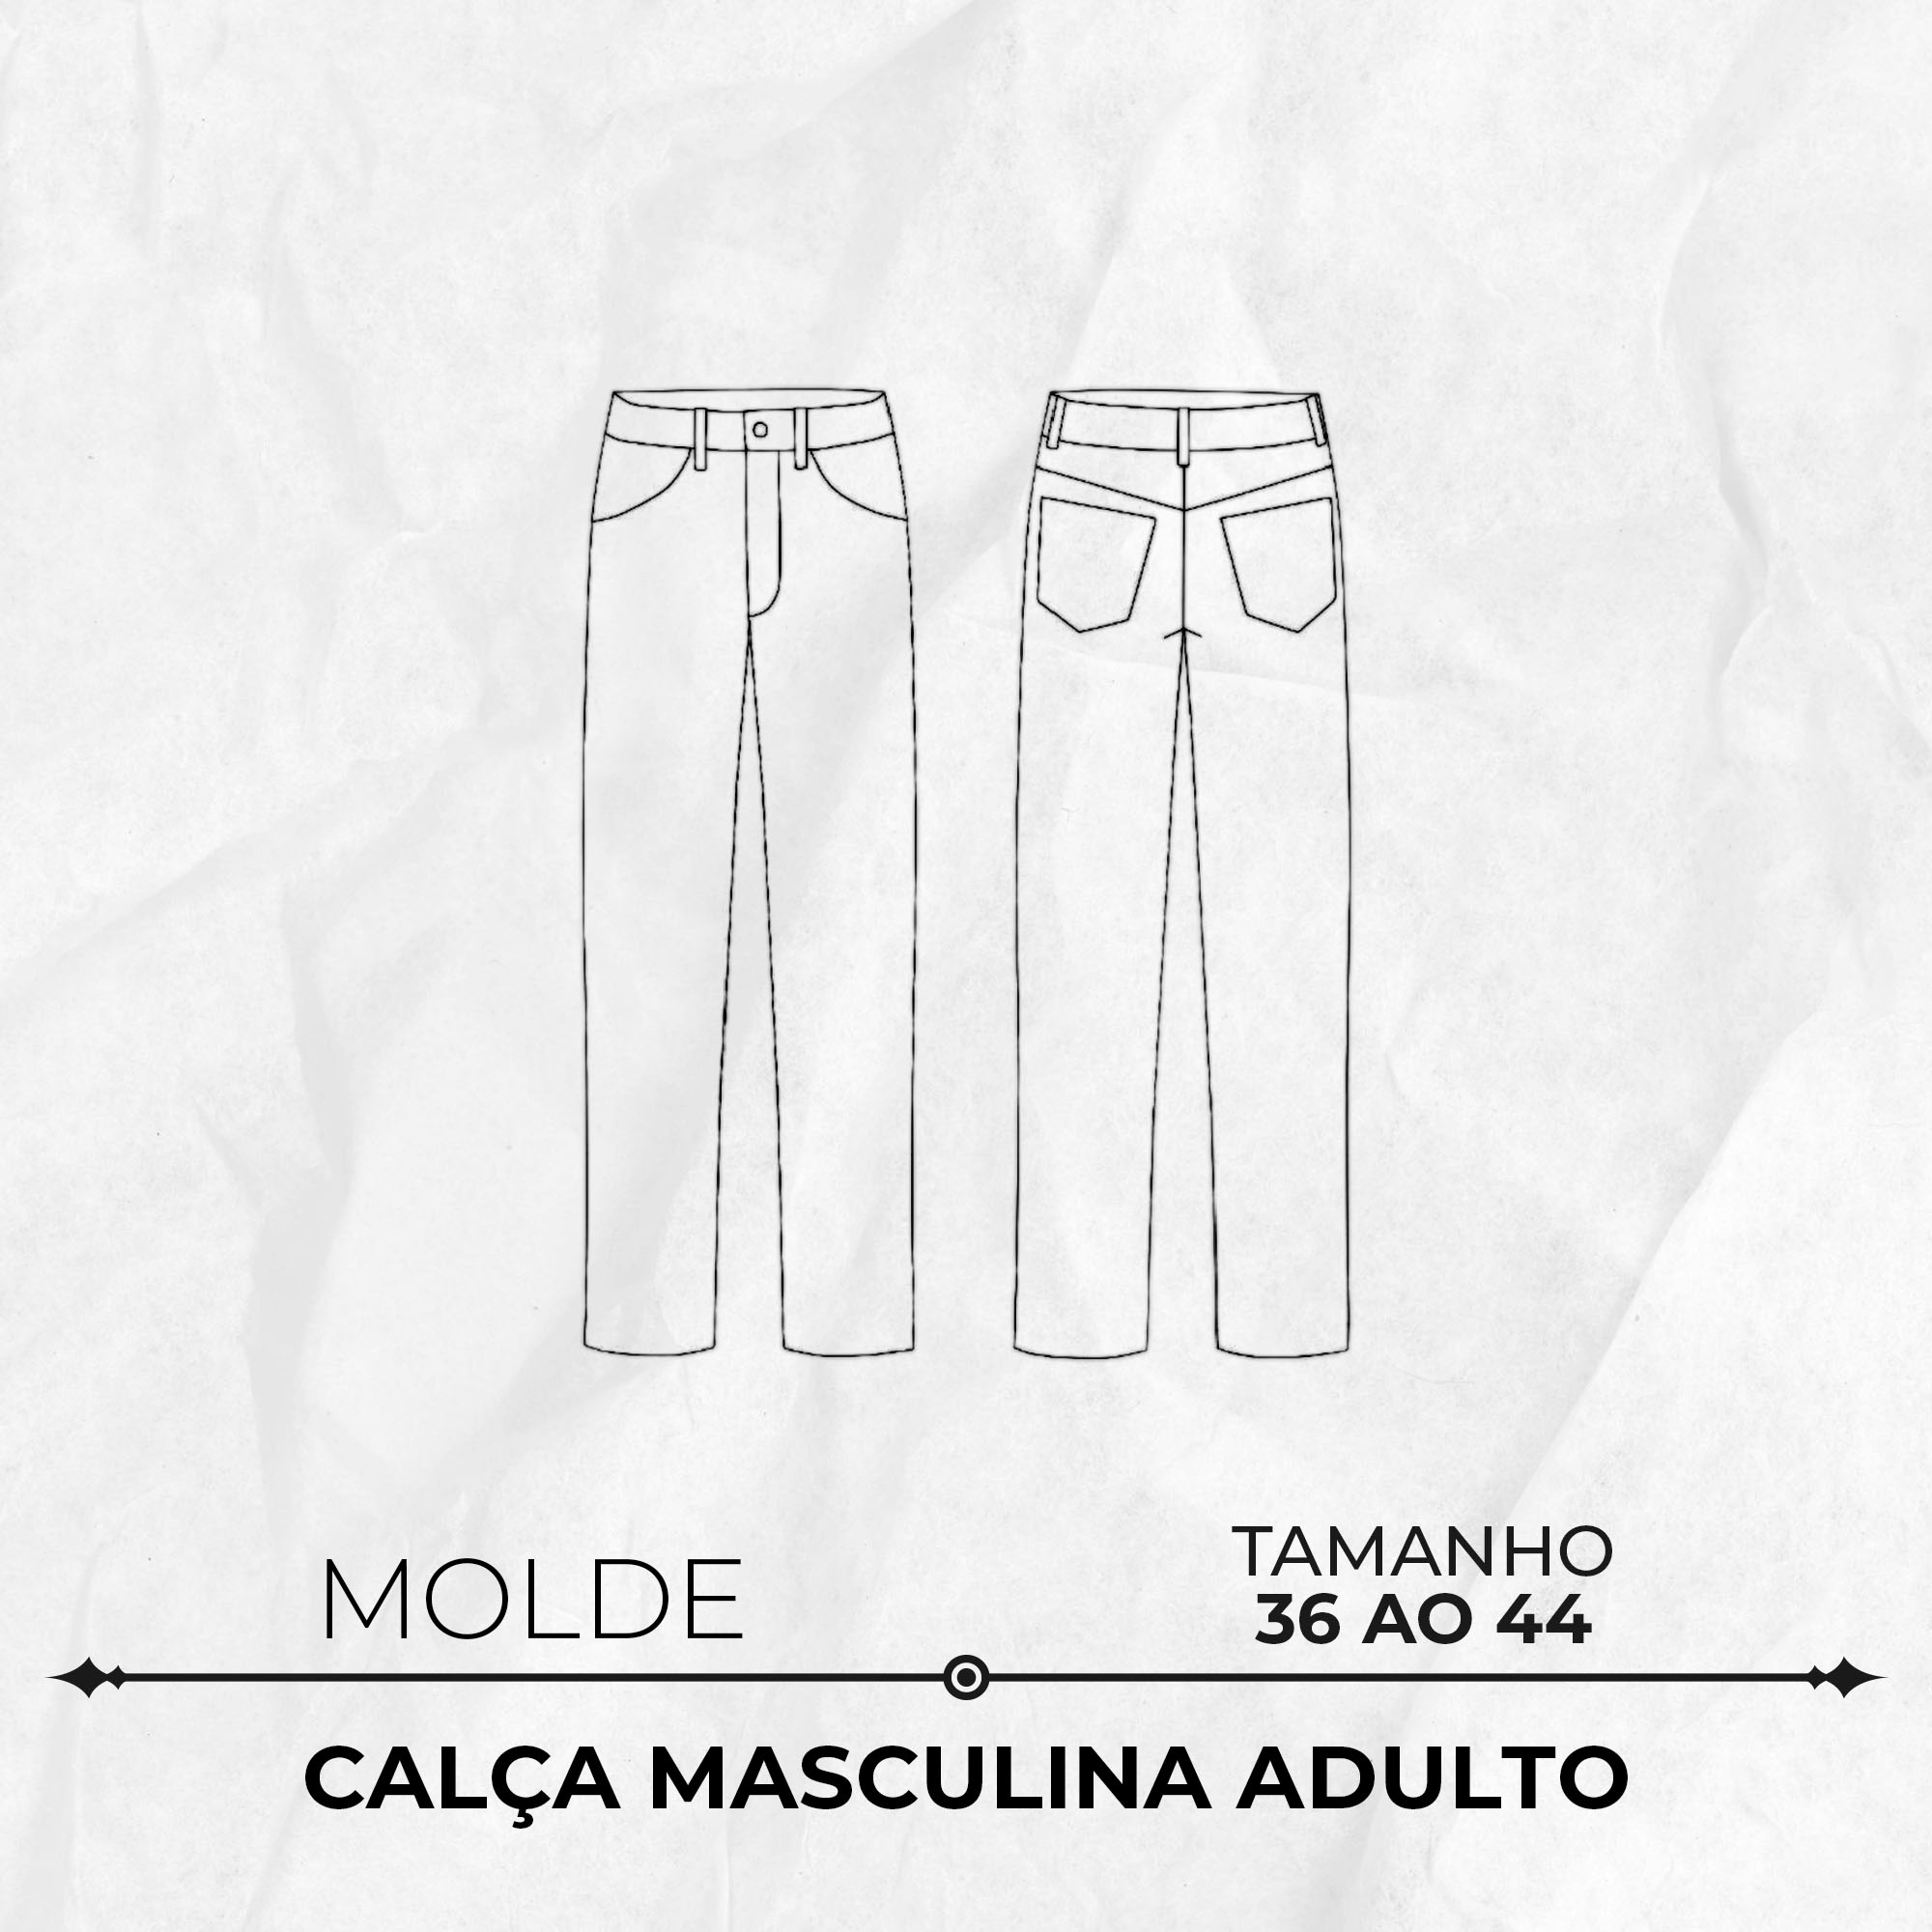 Molde calça masculina adulto tamanho 36 ao 44 by Wania Machado